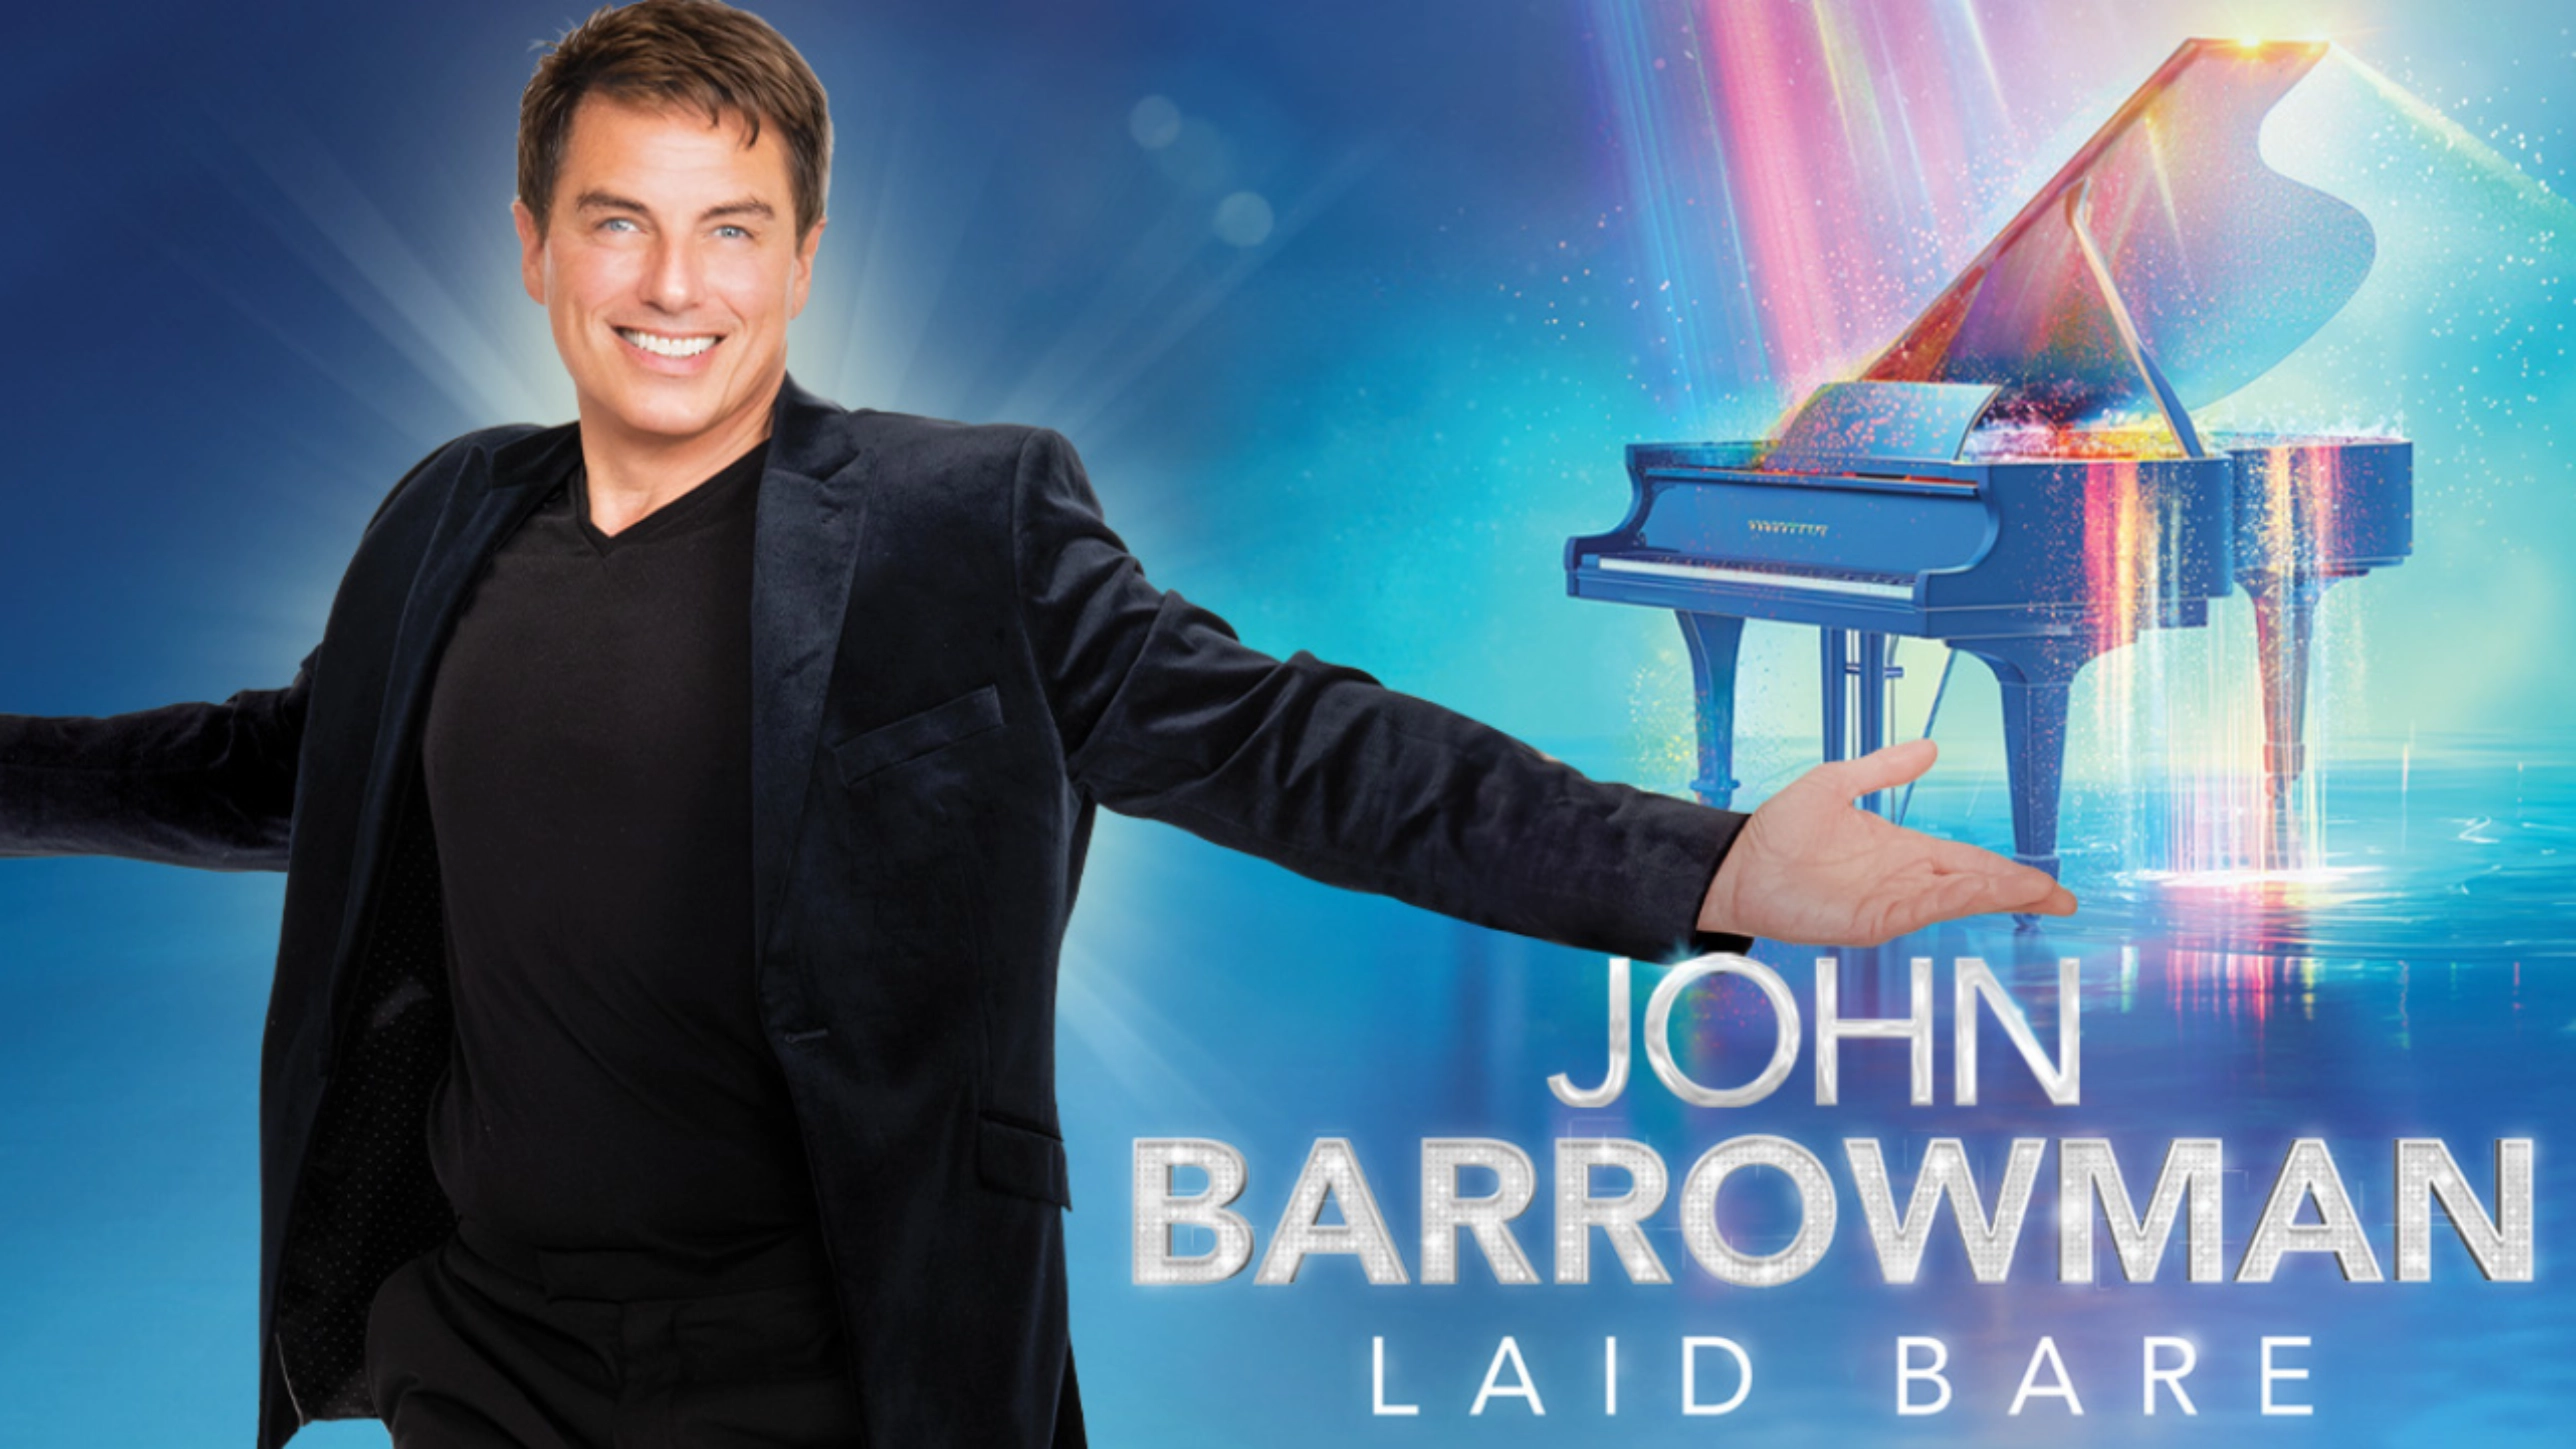 John Barrowman - Laid Bare